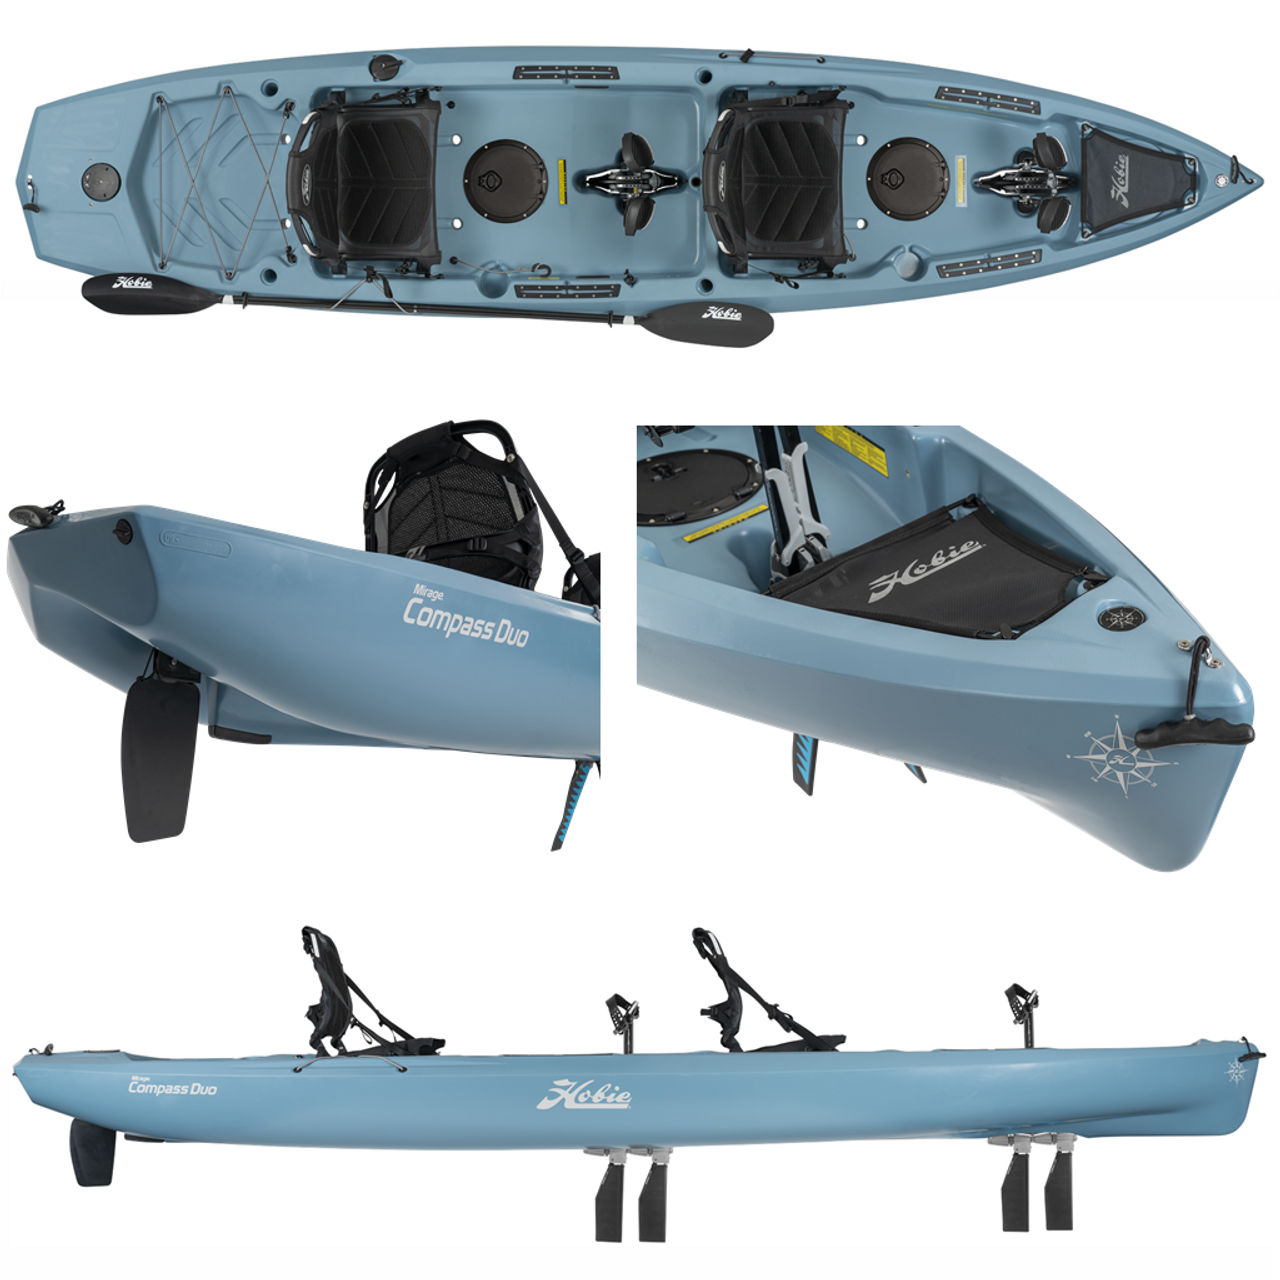 Hobie Mirage Compass Duo with Kick-Up Fins - Tandem Pedal Kayak